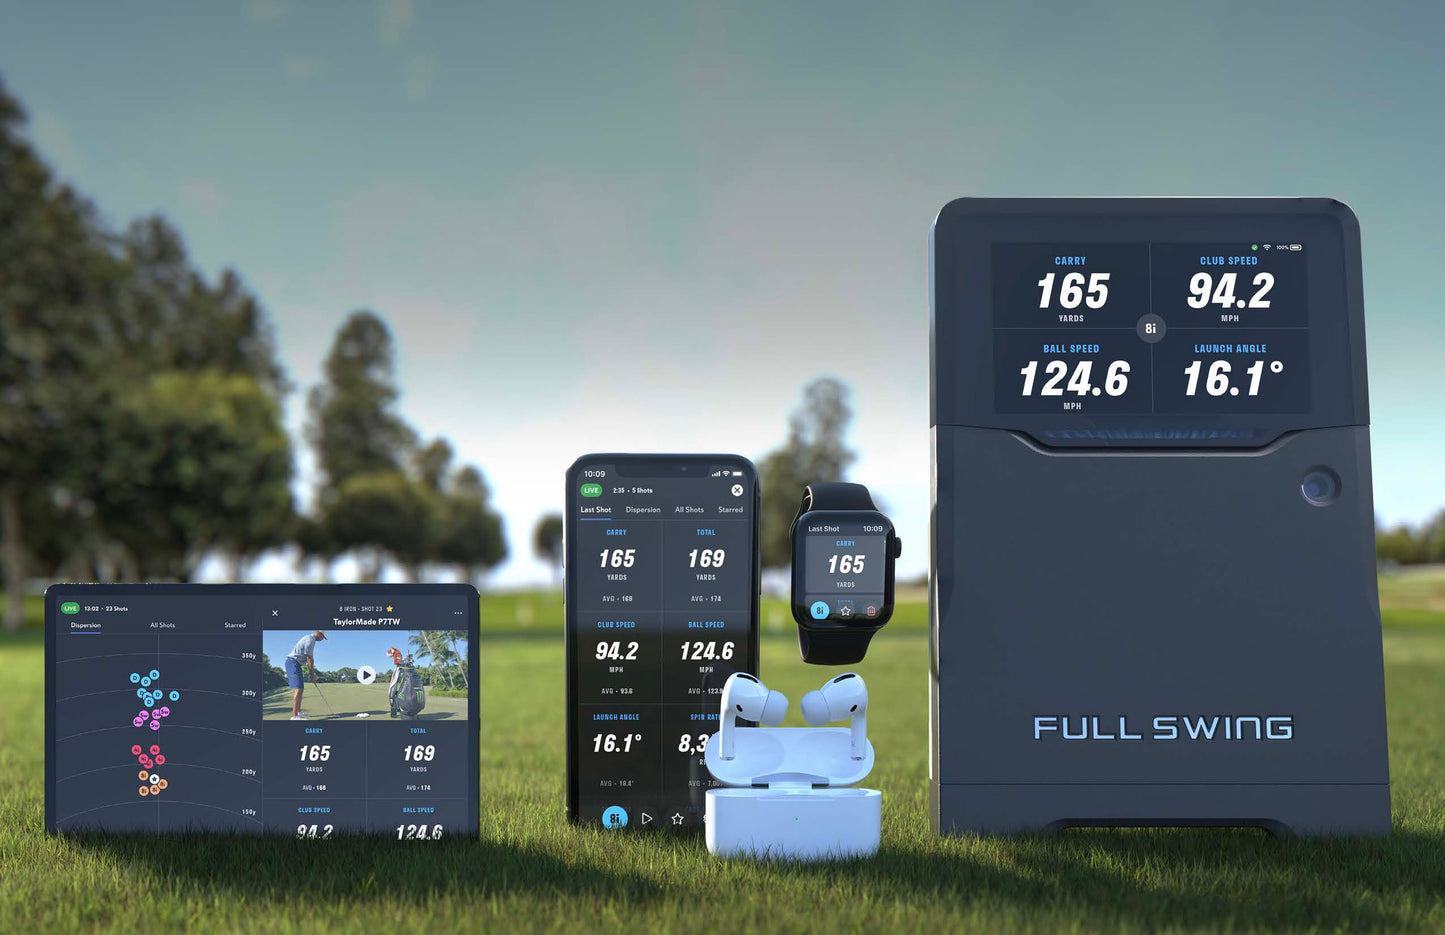 Simulateur de golf Full Swing Kit